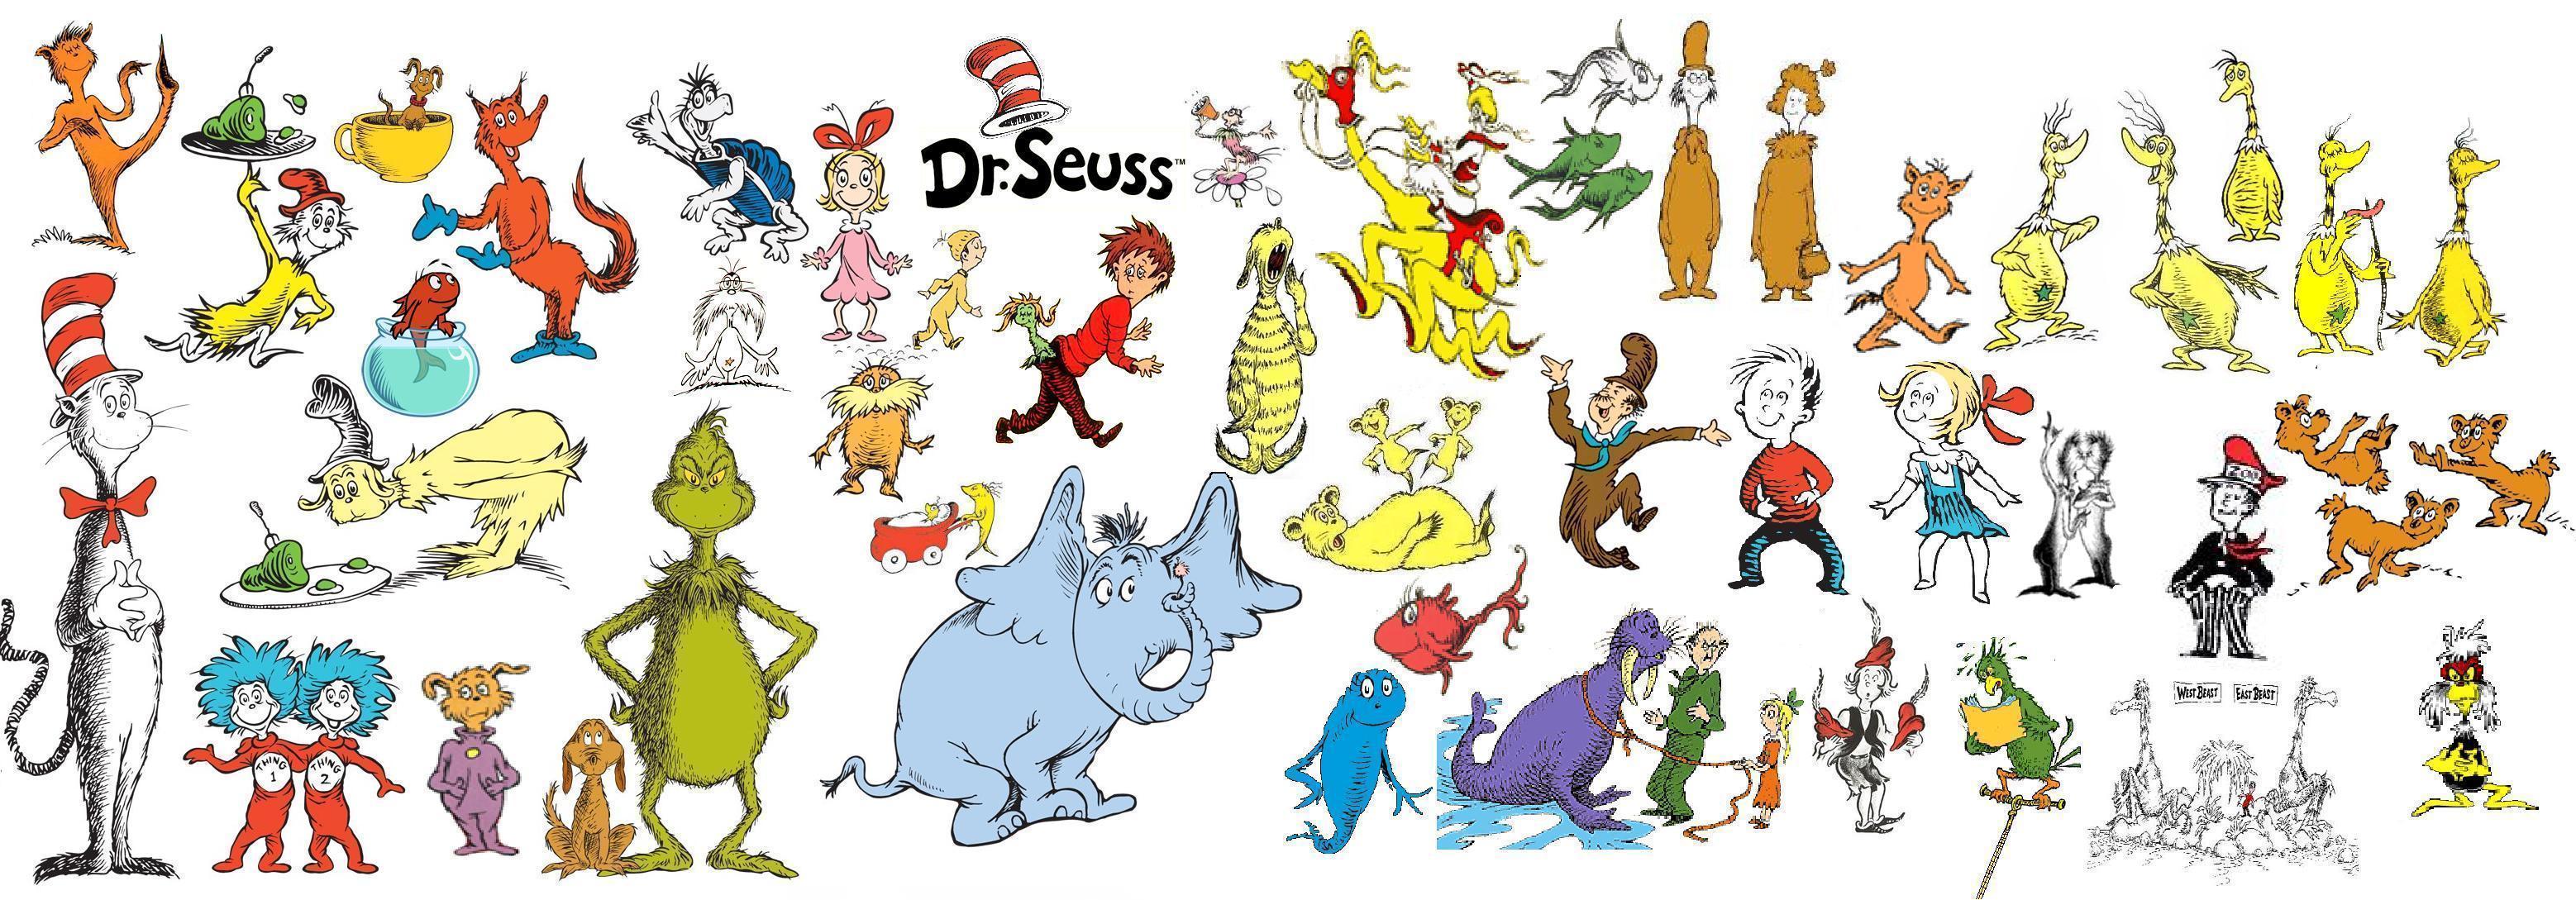 Cartoons Dr Seuss 1020x1282 – 100% Quality HD Wallpapers